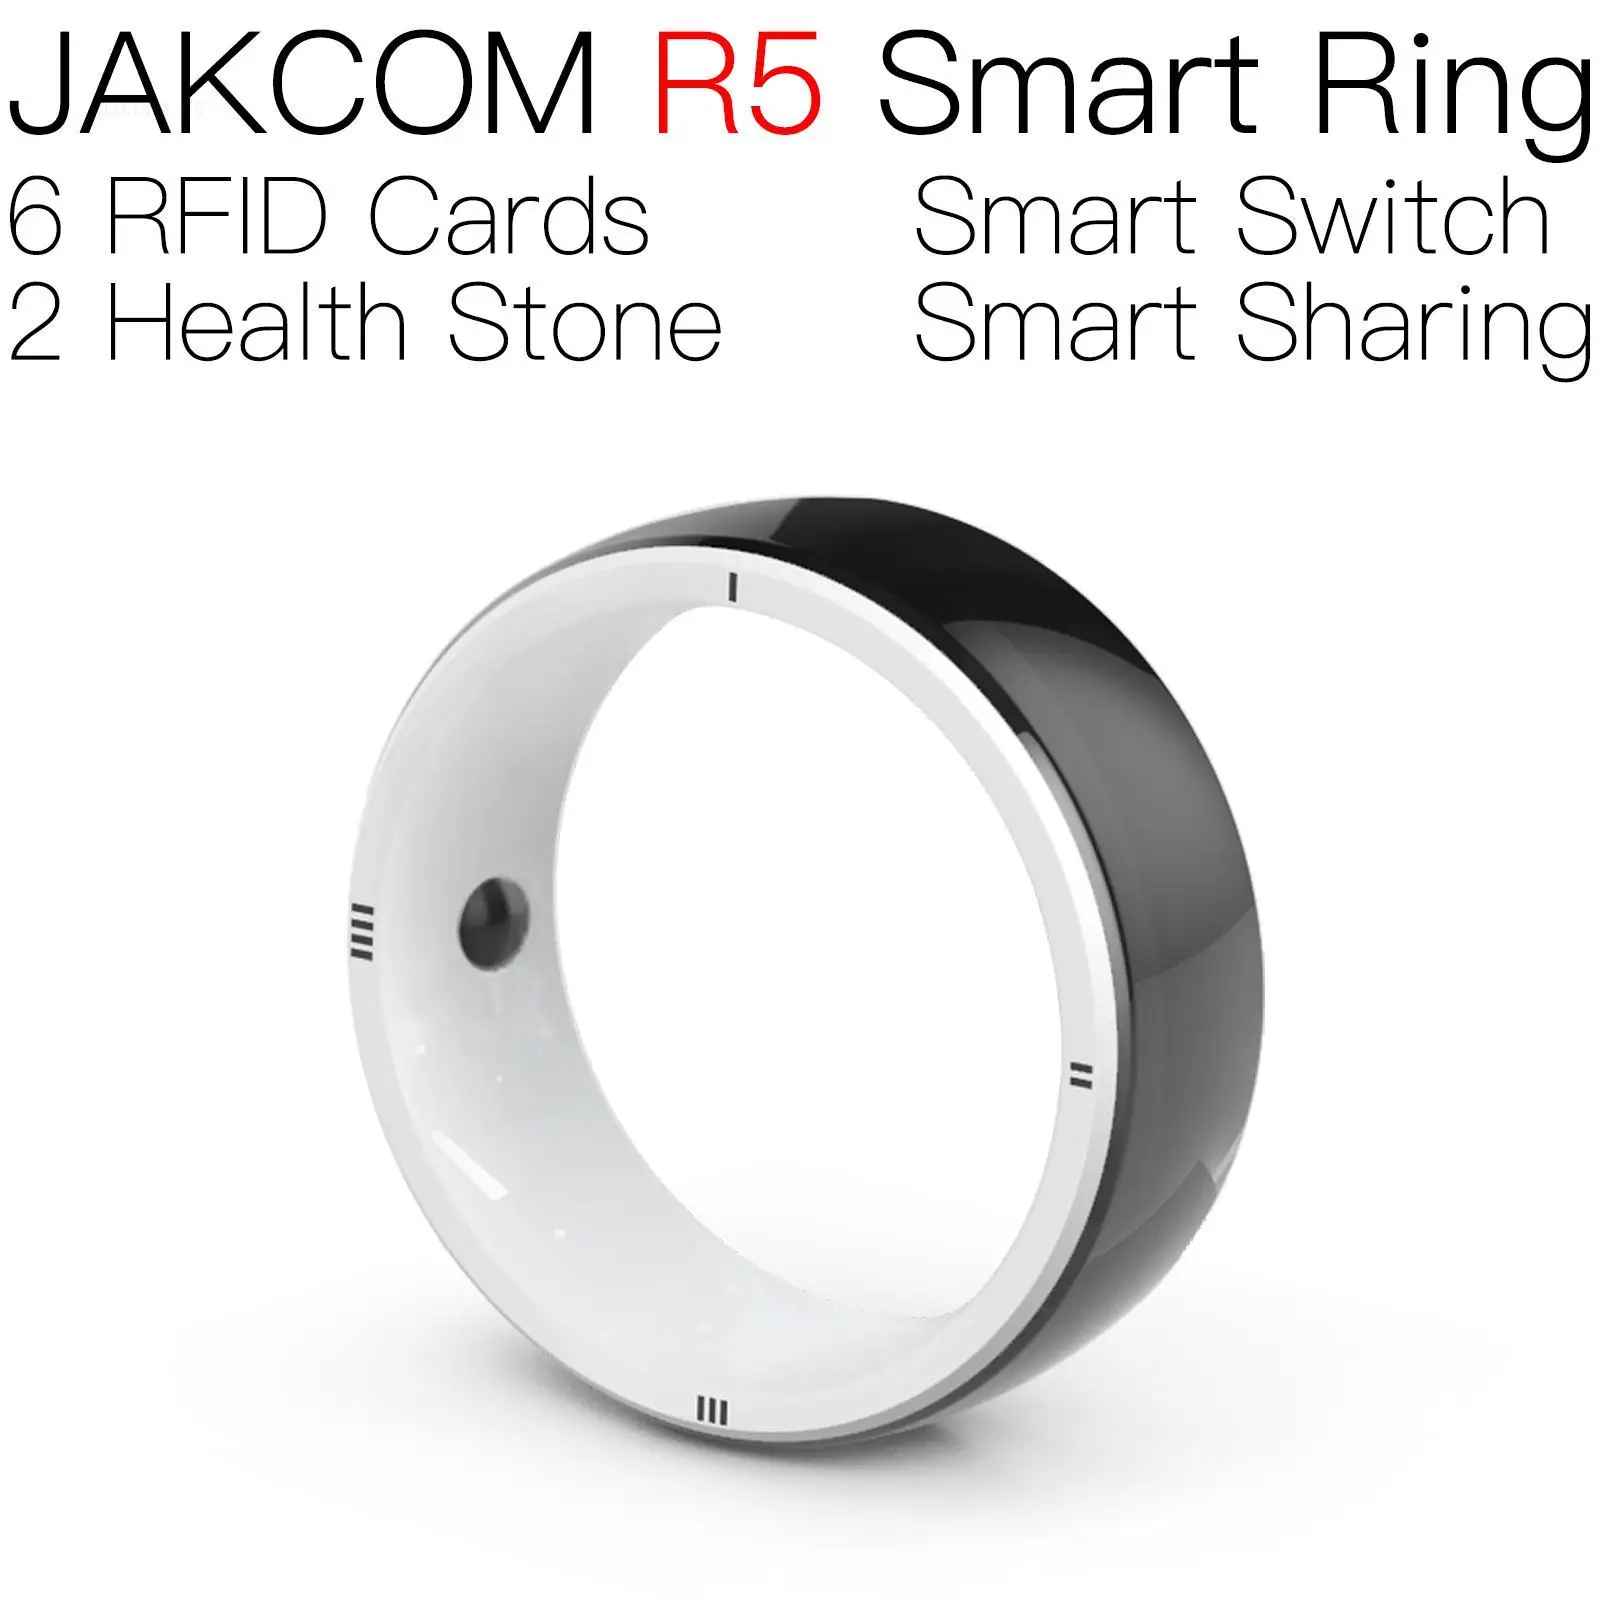 

JAKCOM R5 Smart Ring Super value as videoland nl pet feeder microchip flipper zero rfid duplicator nfc visiting card uhf 860